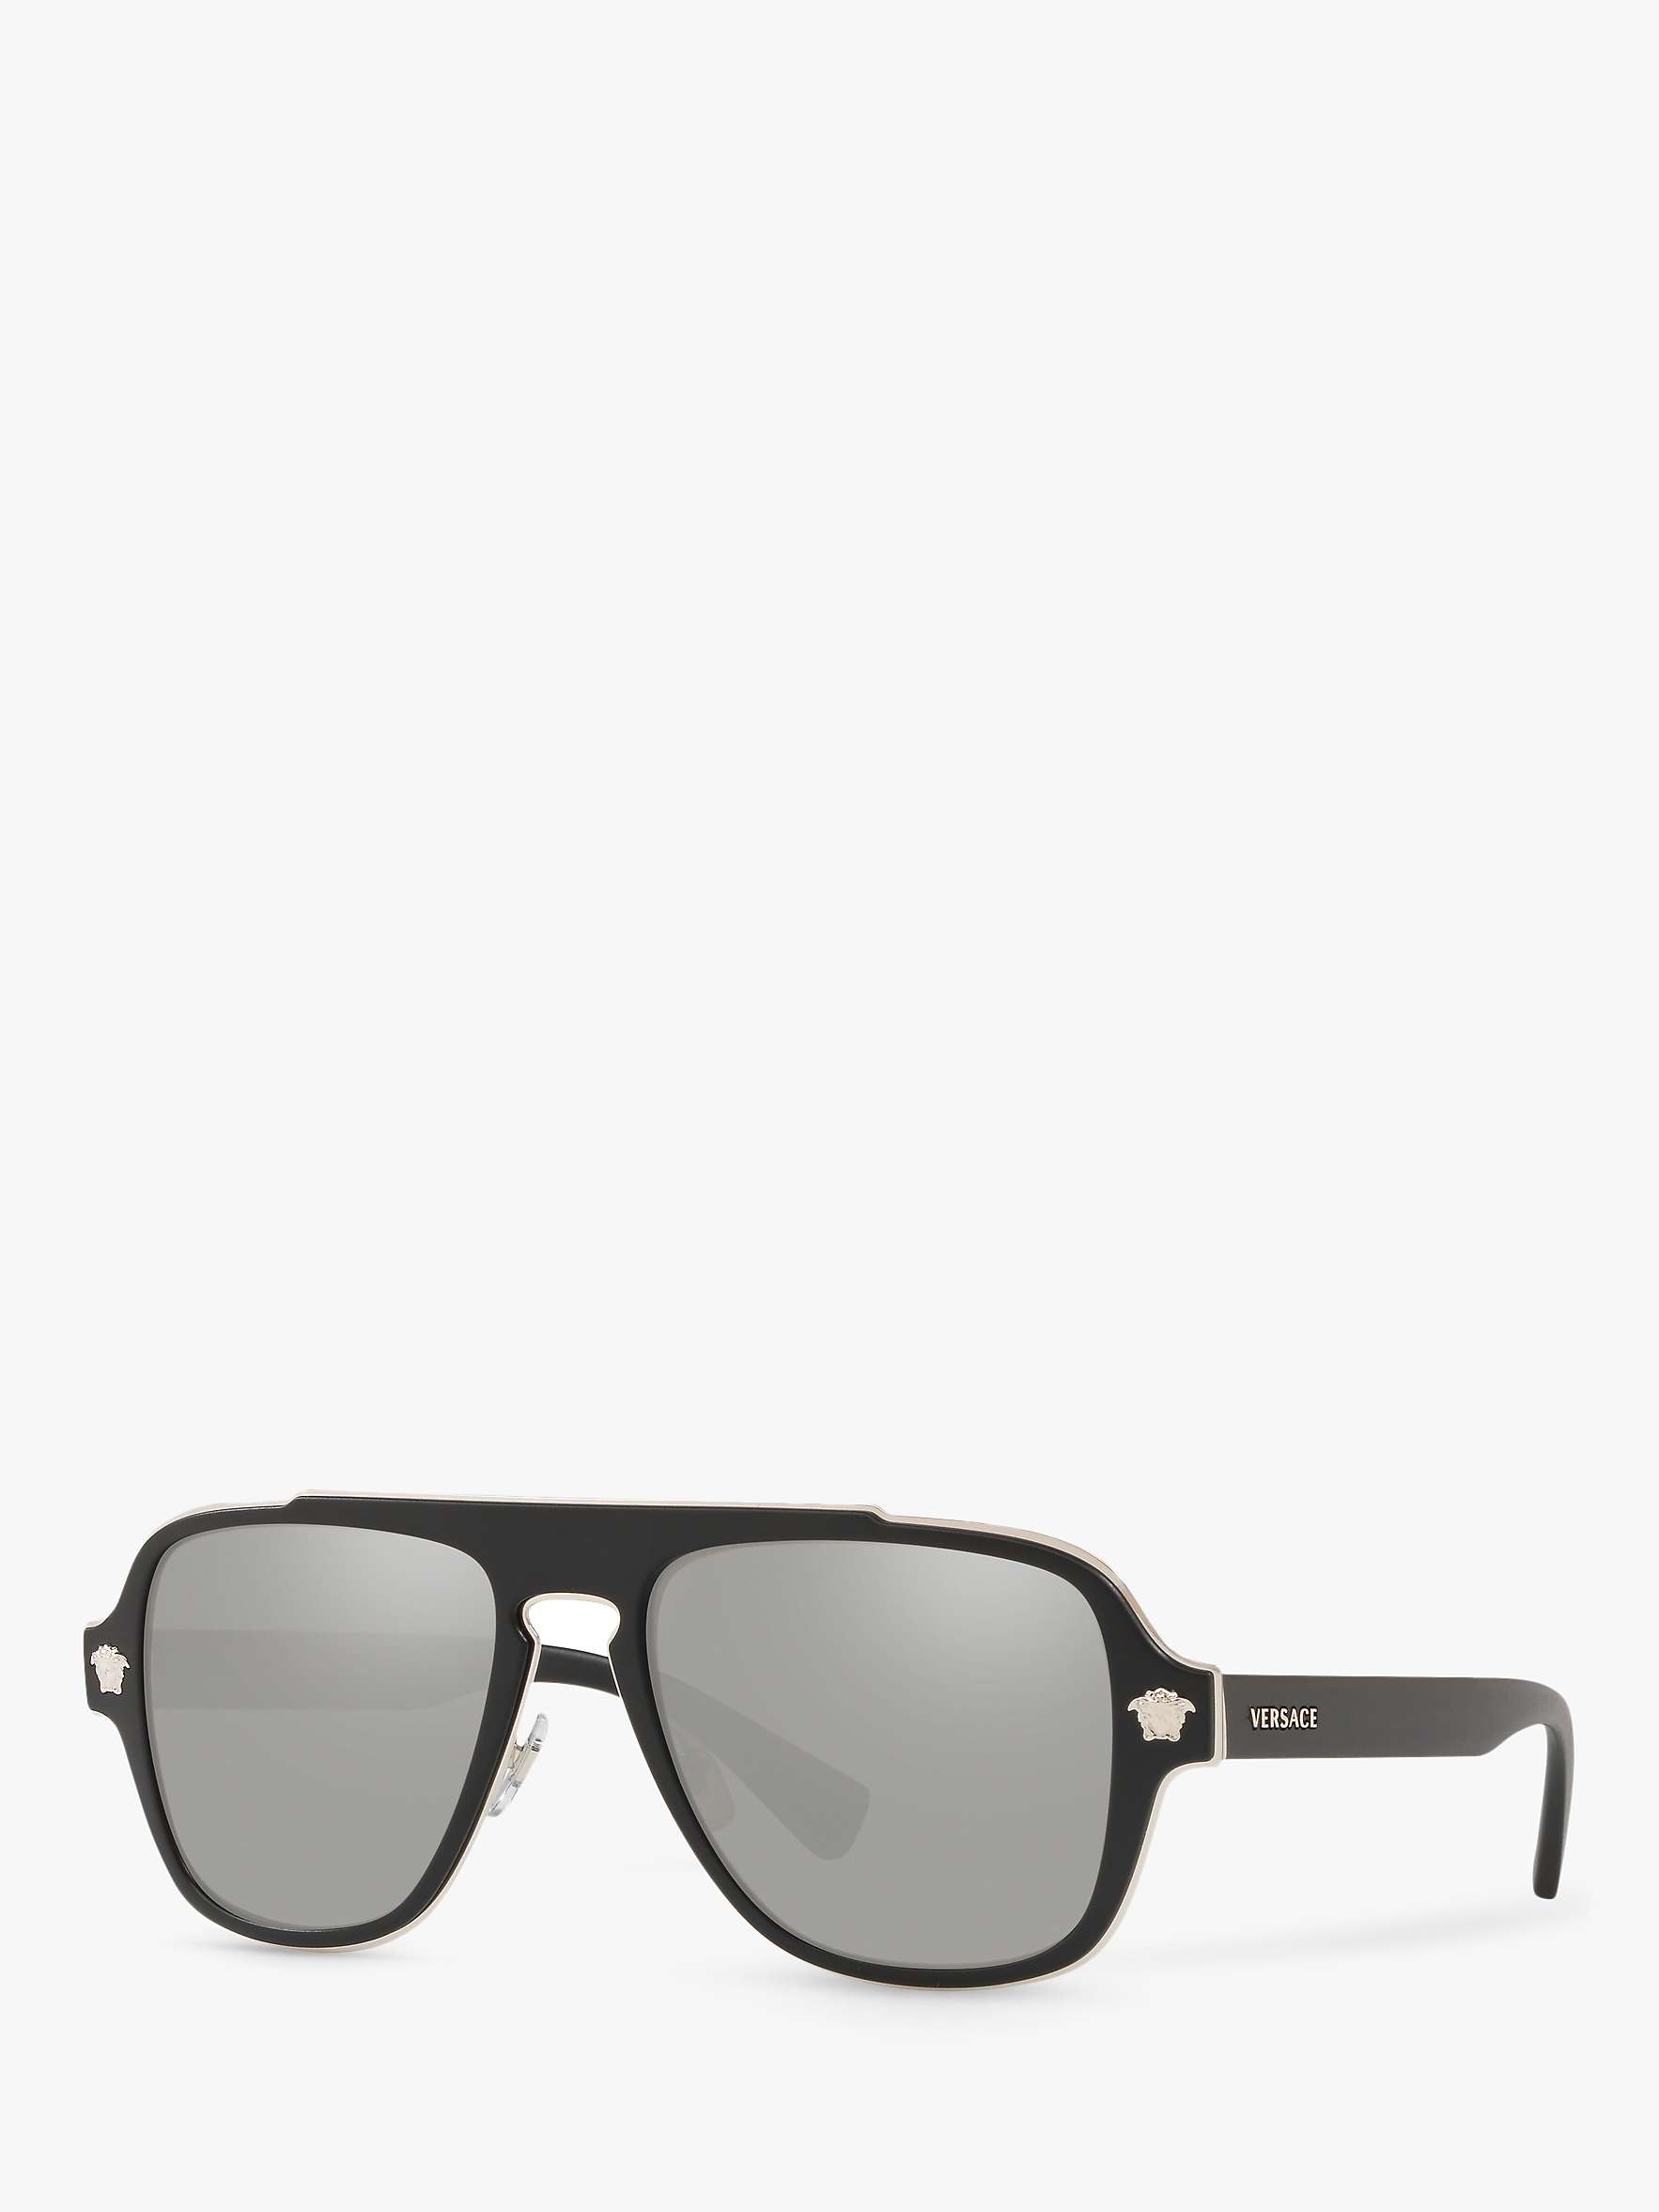 Versace VE2199 Men's Geometric Sunglasses, Black/Silver Mirror at John ...